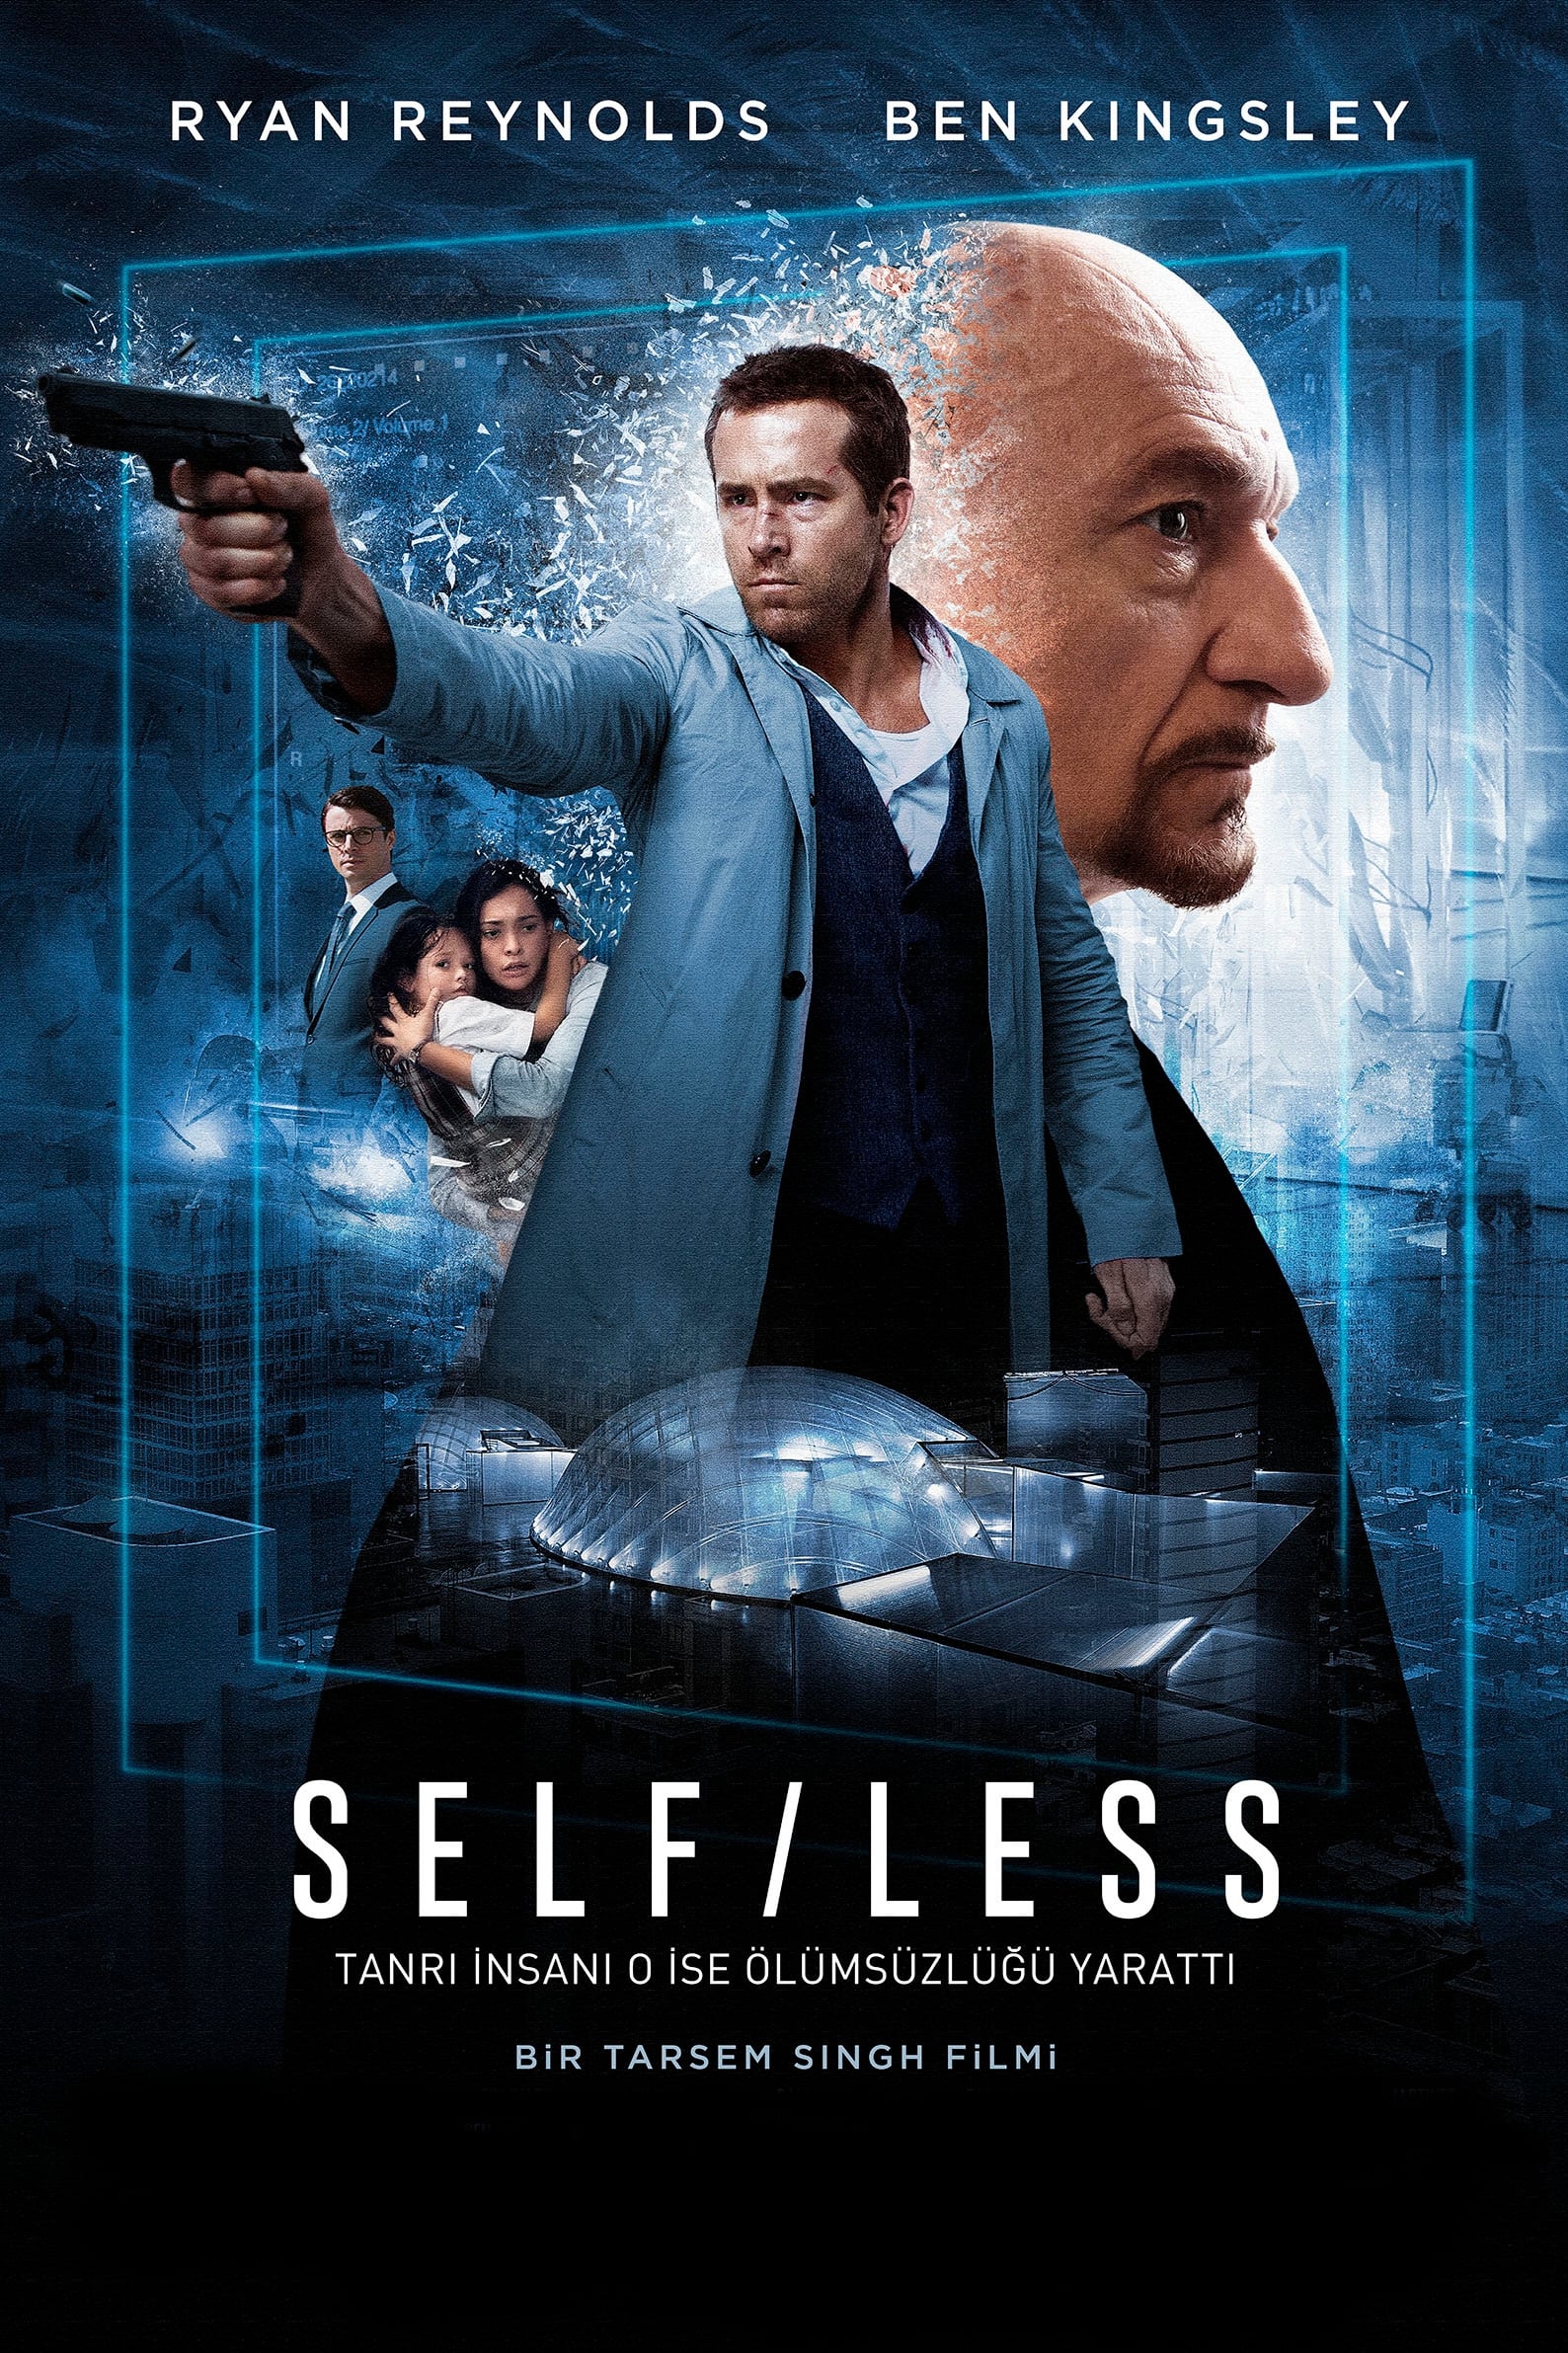 Selfless - Self/less